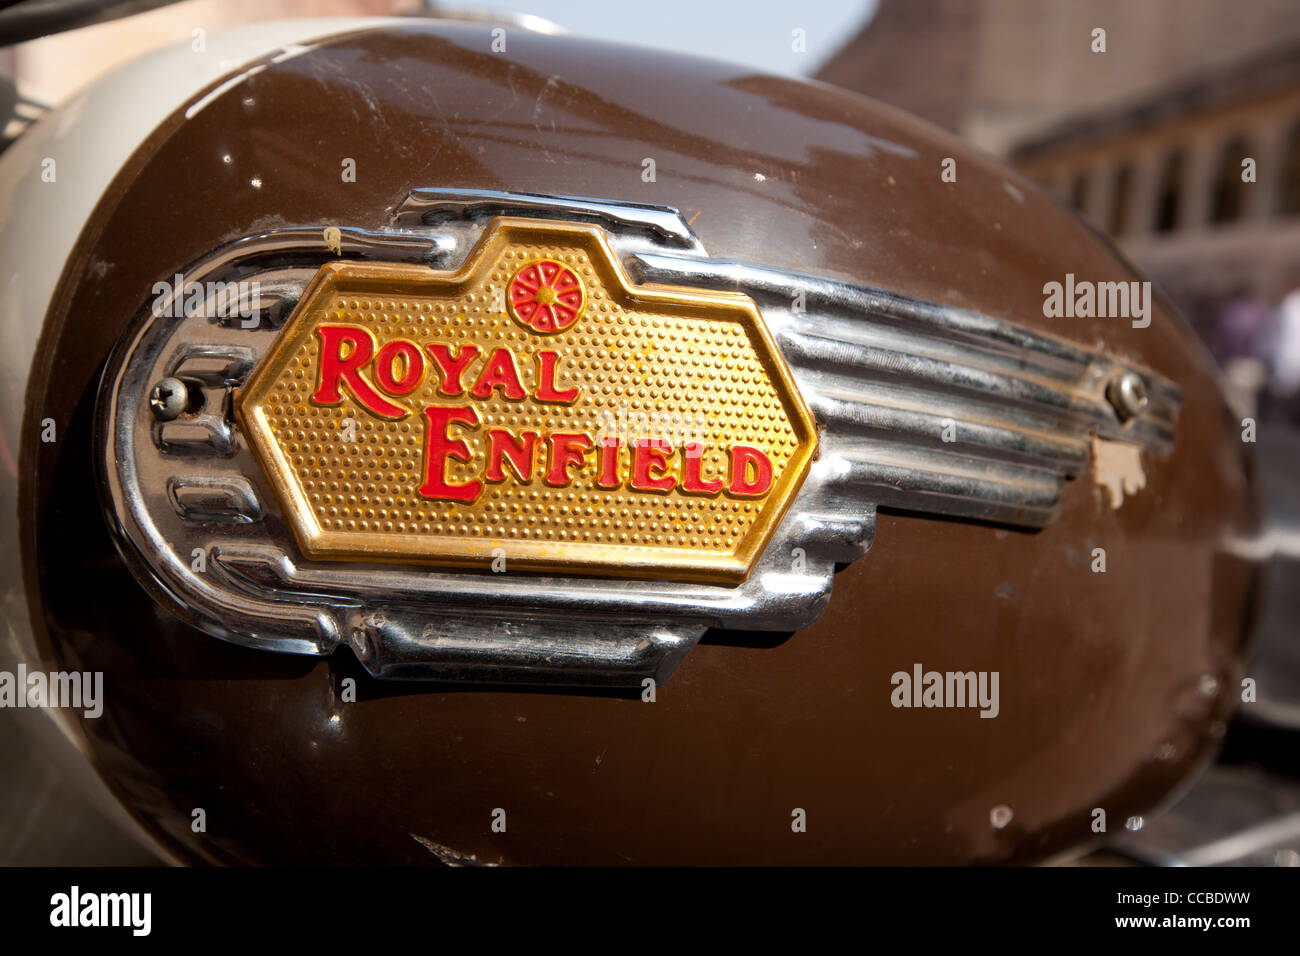 Royal Enfield motorcycle, inside Mehrangarh Fort, in Jodhpur, in Rajasthan, India Stock Photo